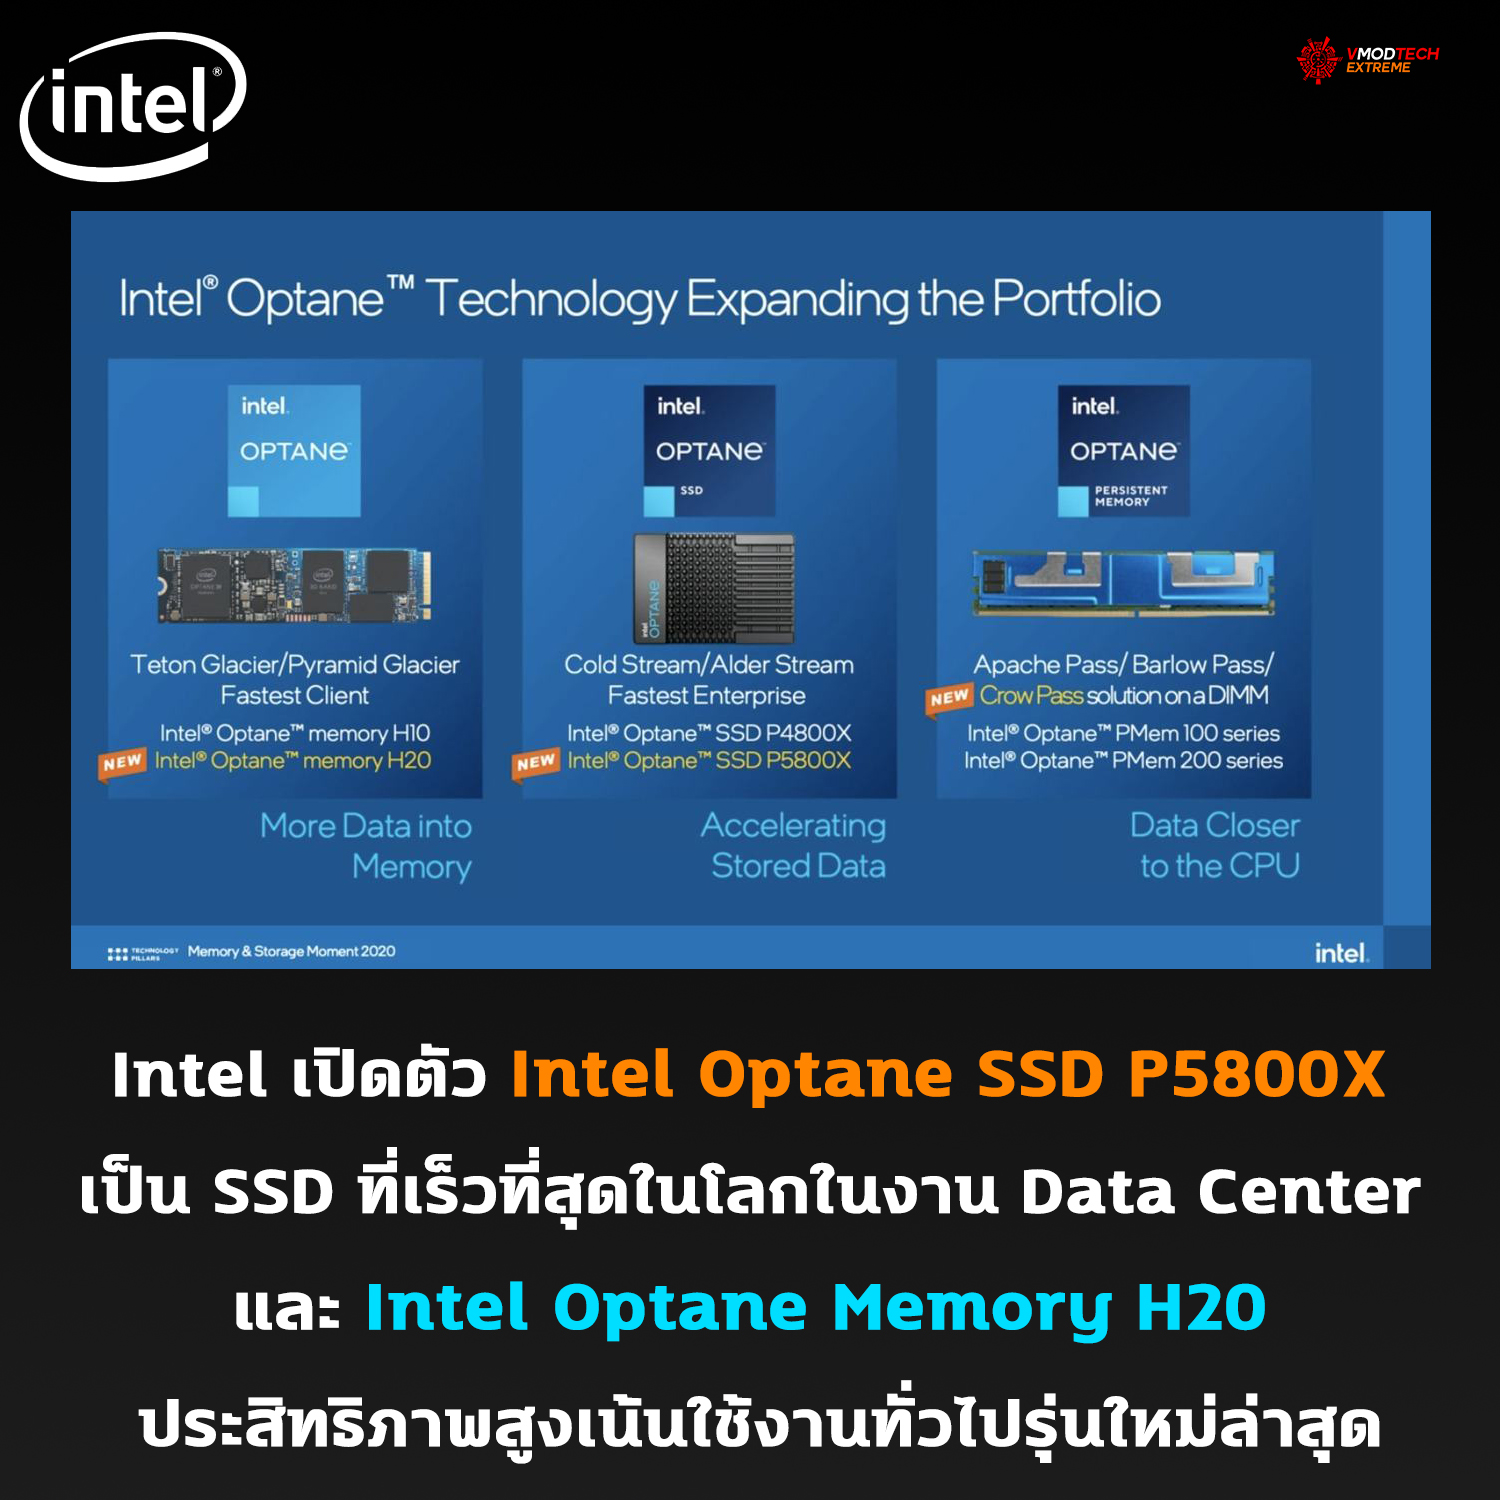 intel optane ssd p5800x intel optane memory h20 Intel เปิดตัว Intel Optane SSD P5800X เป็น SSD ที่เร็วที่สุดในโลกในงาน Data Center และ Intel Optane Memory H20 ประสิทธิภาพสูงเน้นใช้งานทั่วไปรุ่นใหม่ล่าสุด